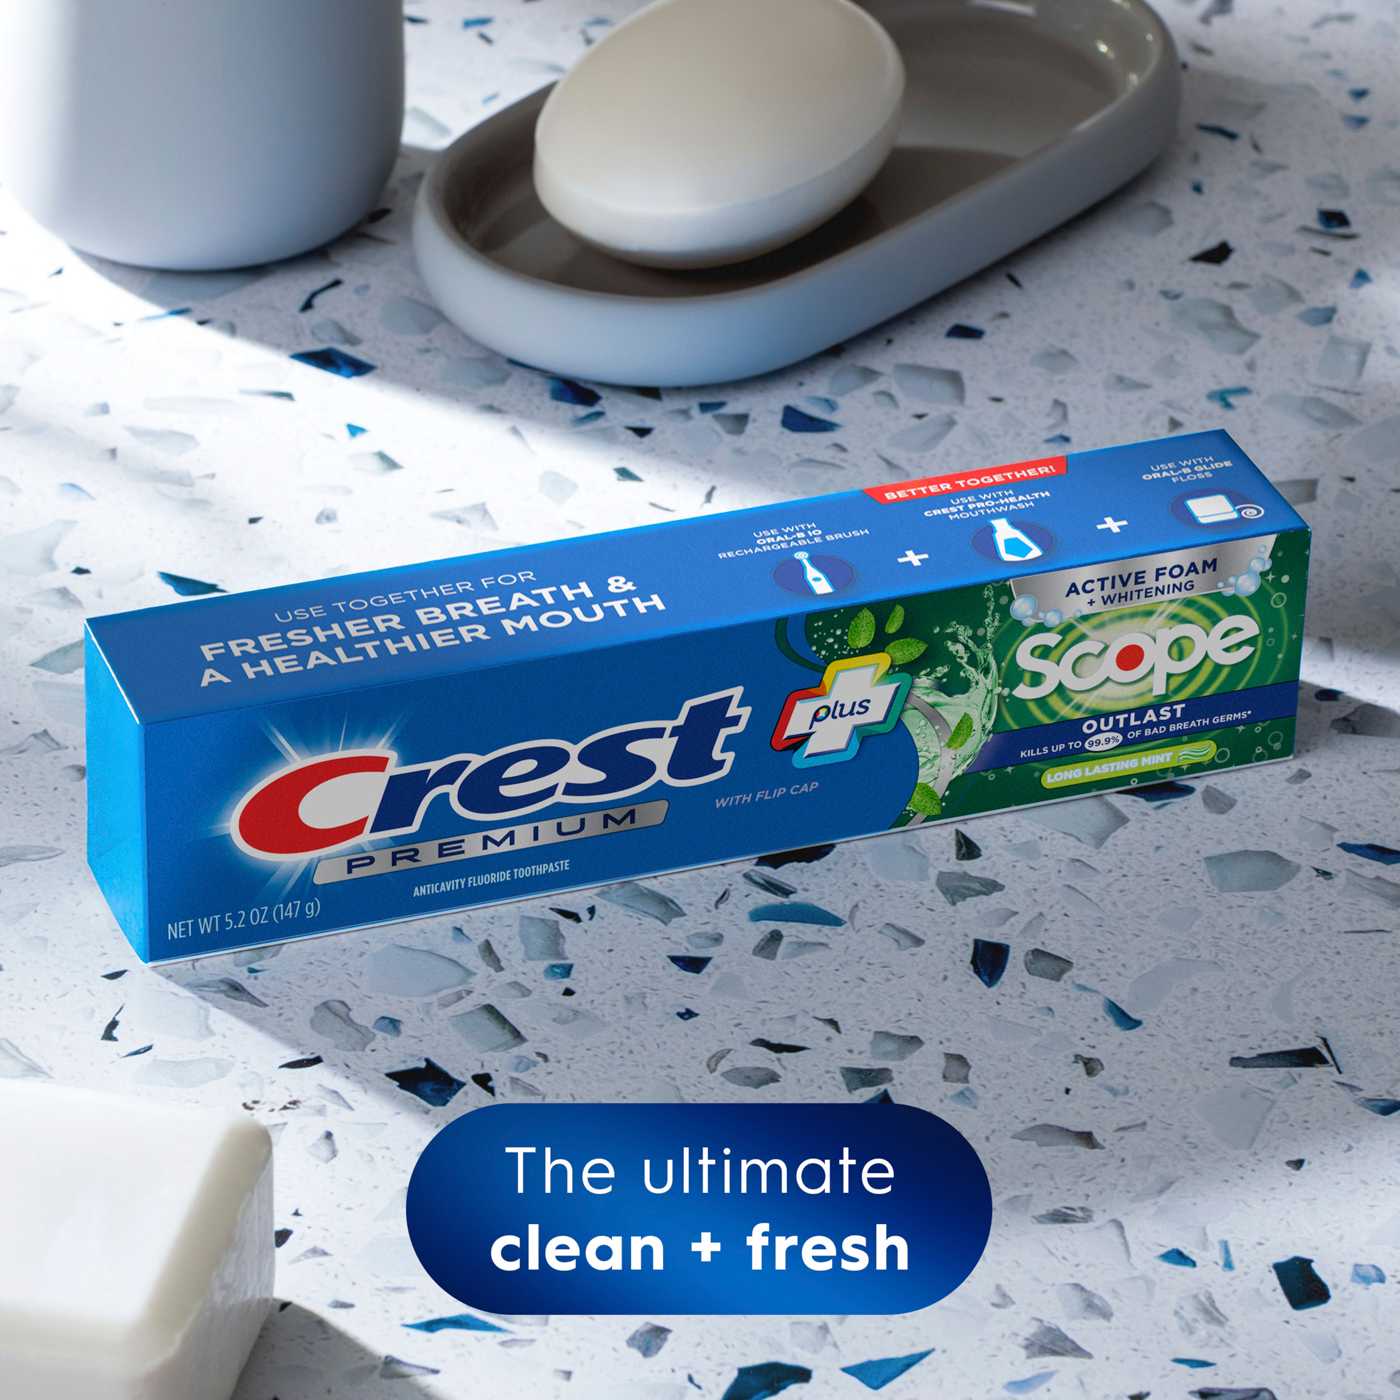 Crest Premium + Scope Outlast Active Foam Toothpaste - Long Lasting Mint; image 5 of 8